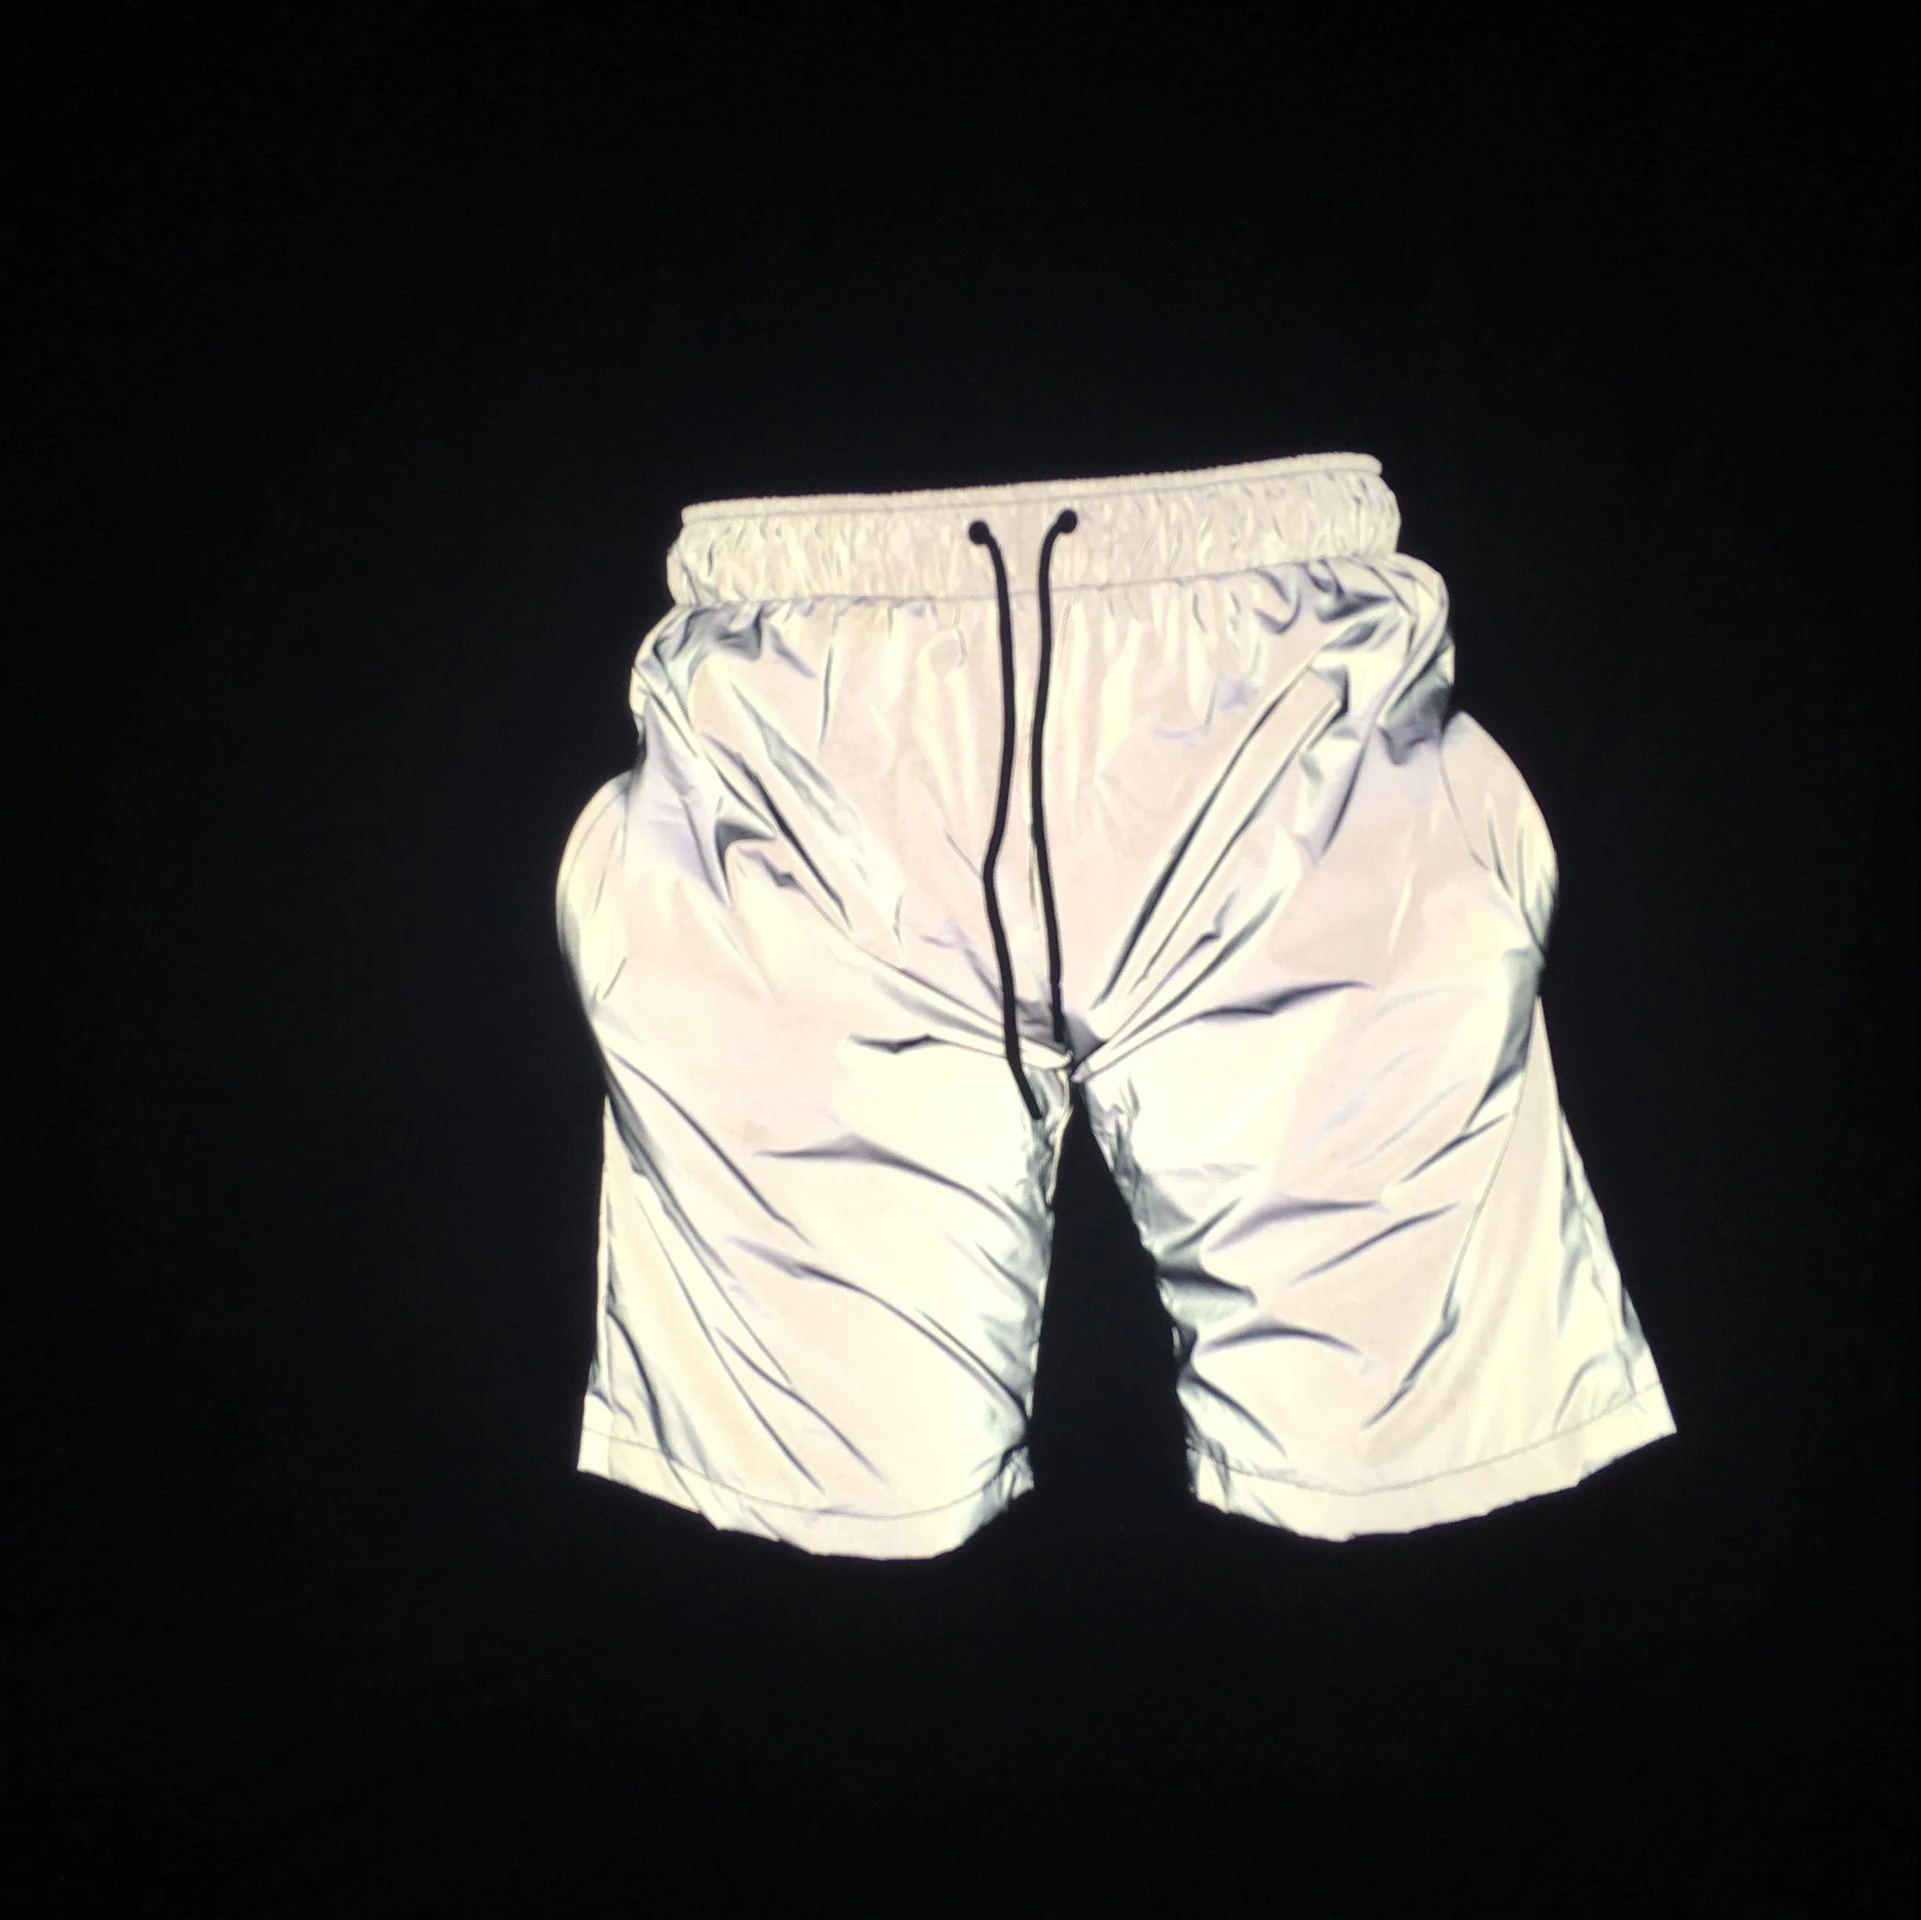 Fashion Holographic Men's Gray Reflective White Shorts Festival Party Psychedelic Shiny Board Shorts